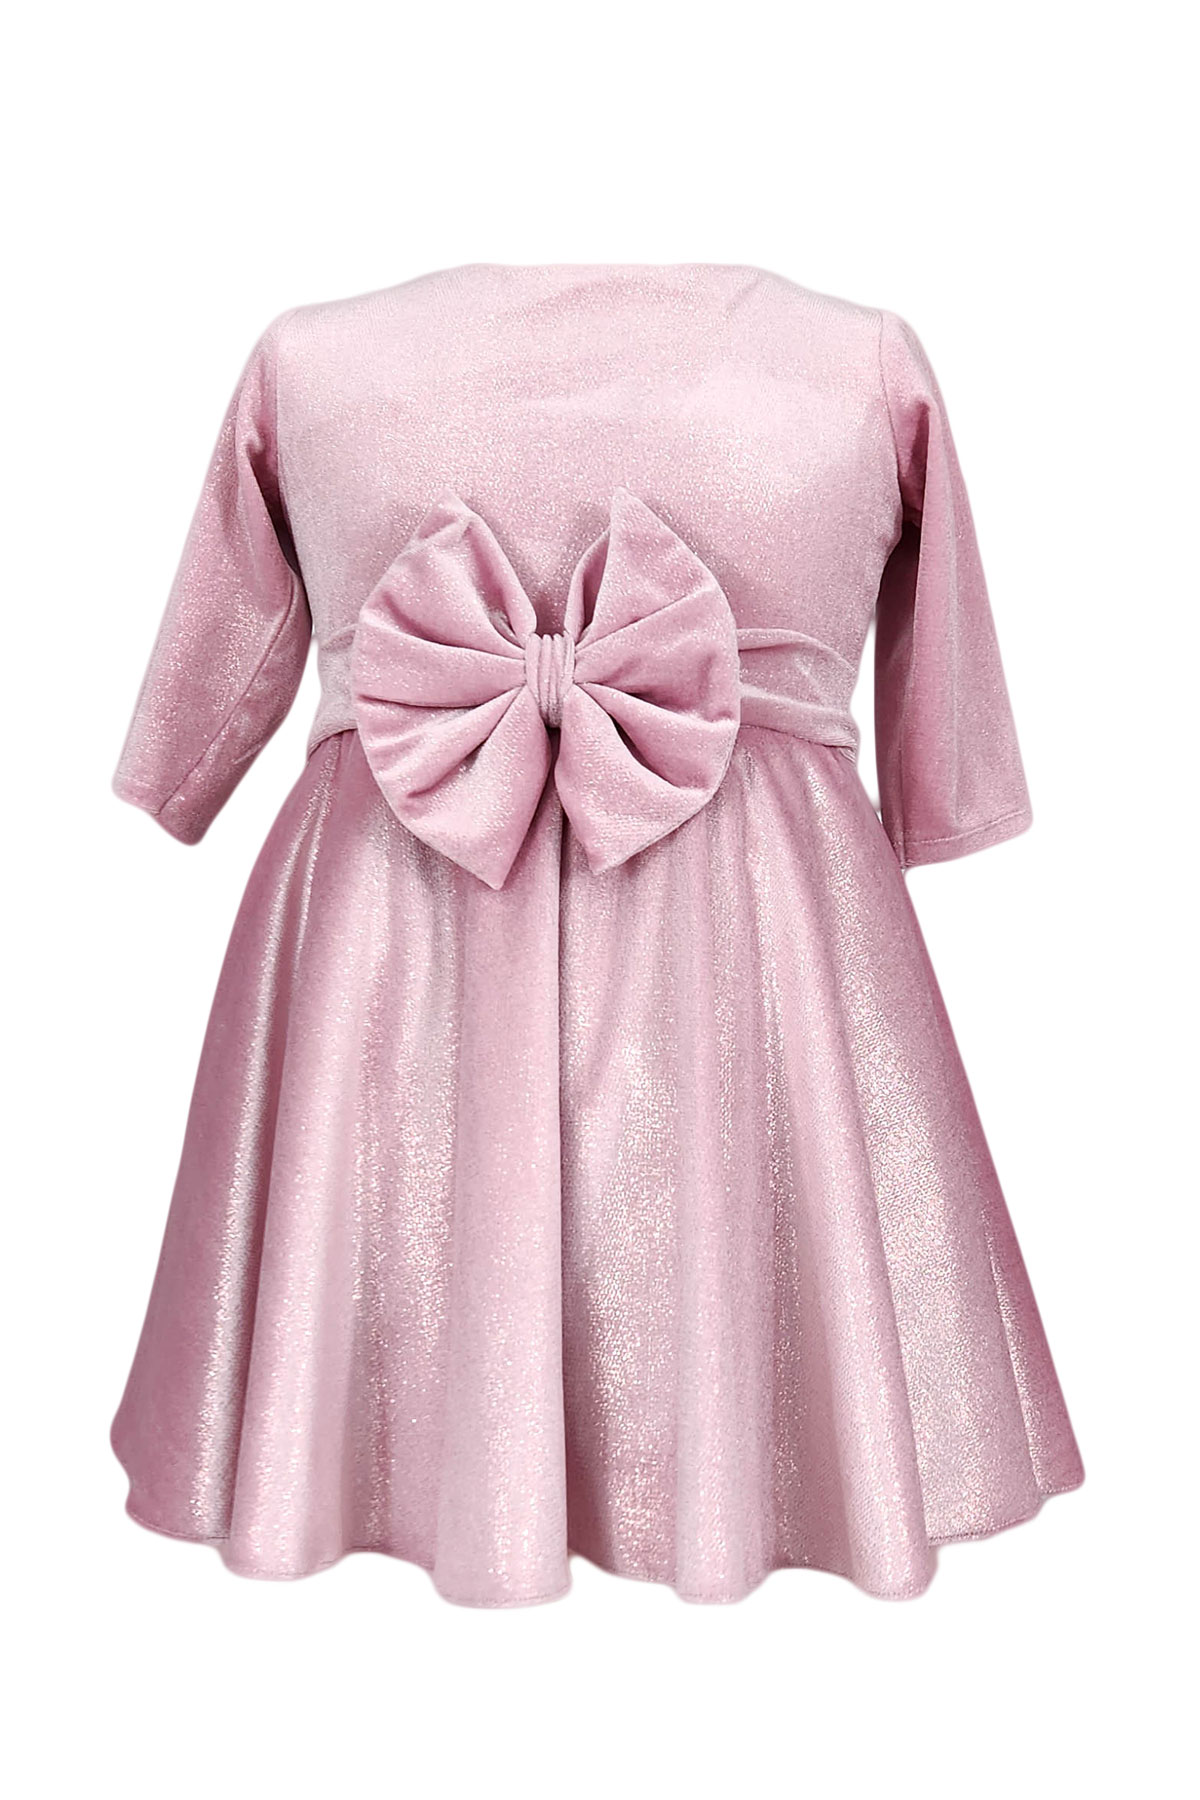 Rochie eleganta pentru fete, model Cris, culoare roz